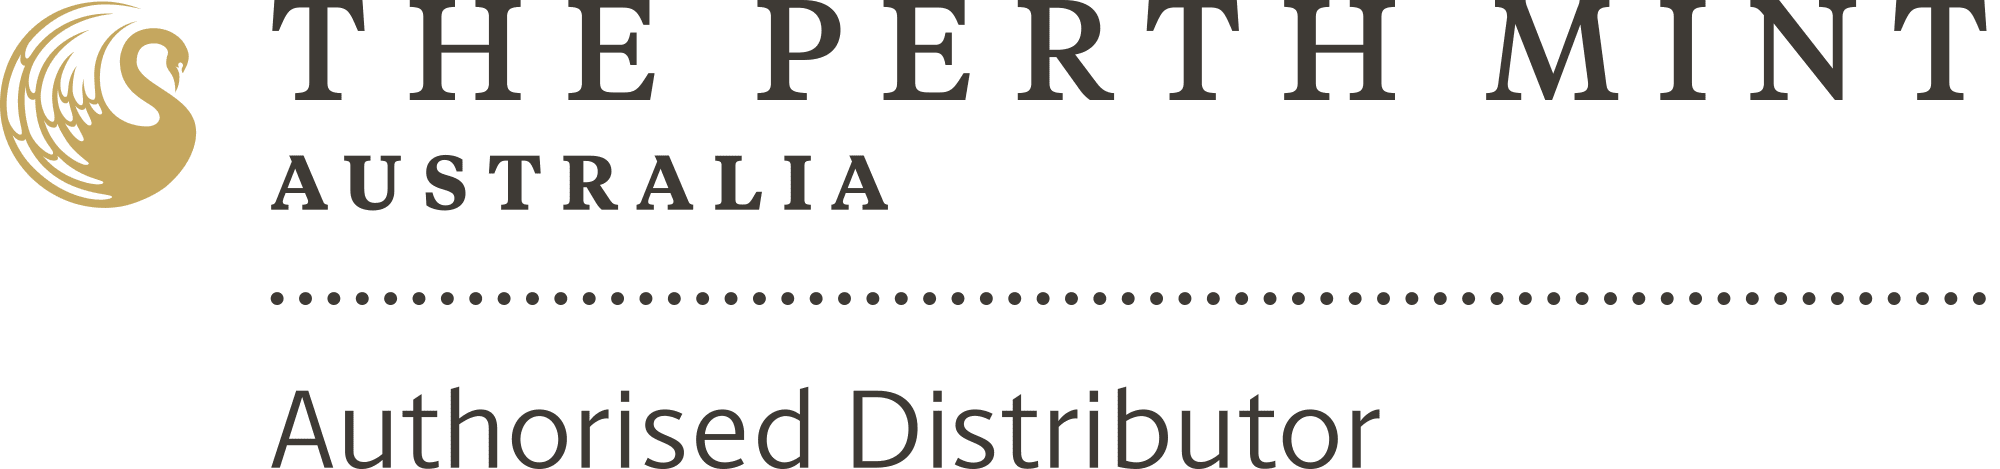 Authorised Perth Mint Distributor